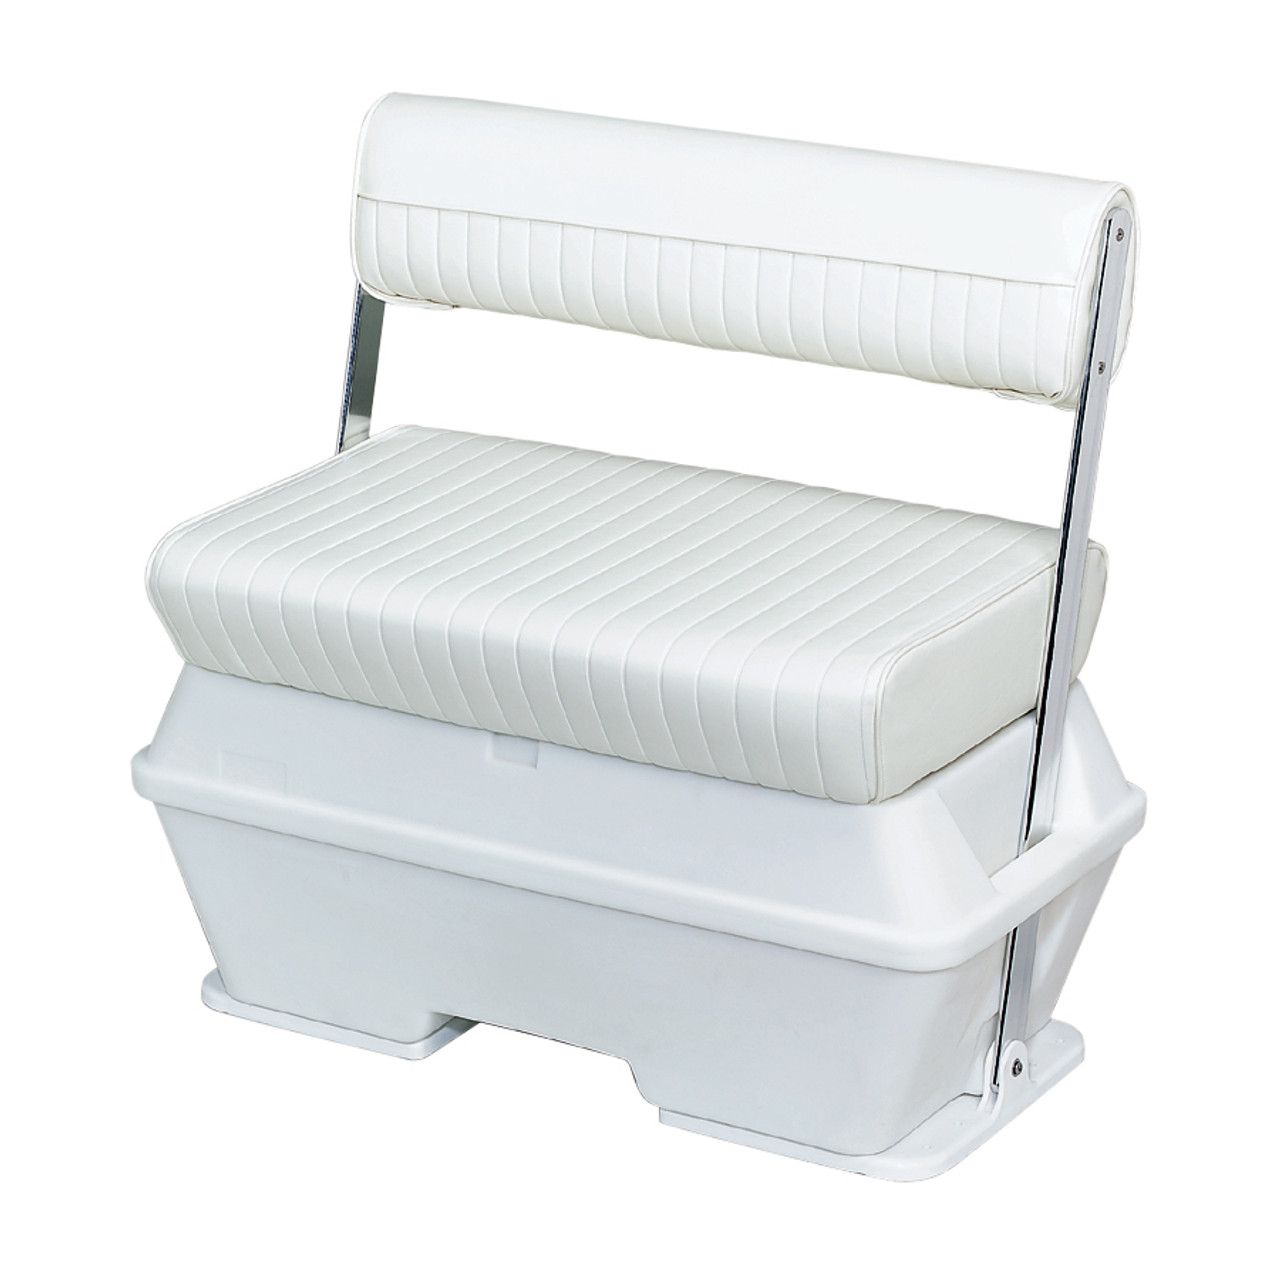 Wise | Swingback Boat Cooler Seat | 50-Quart